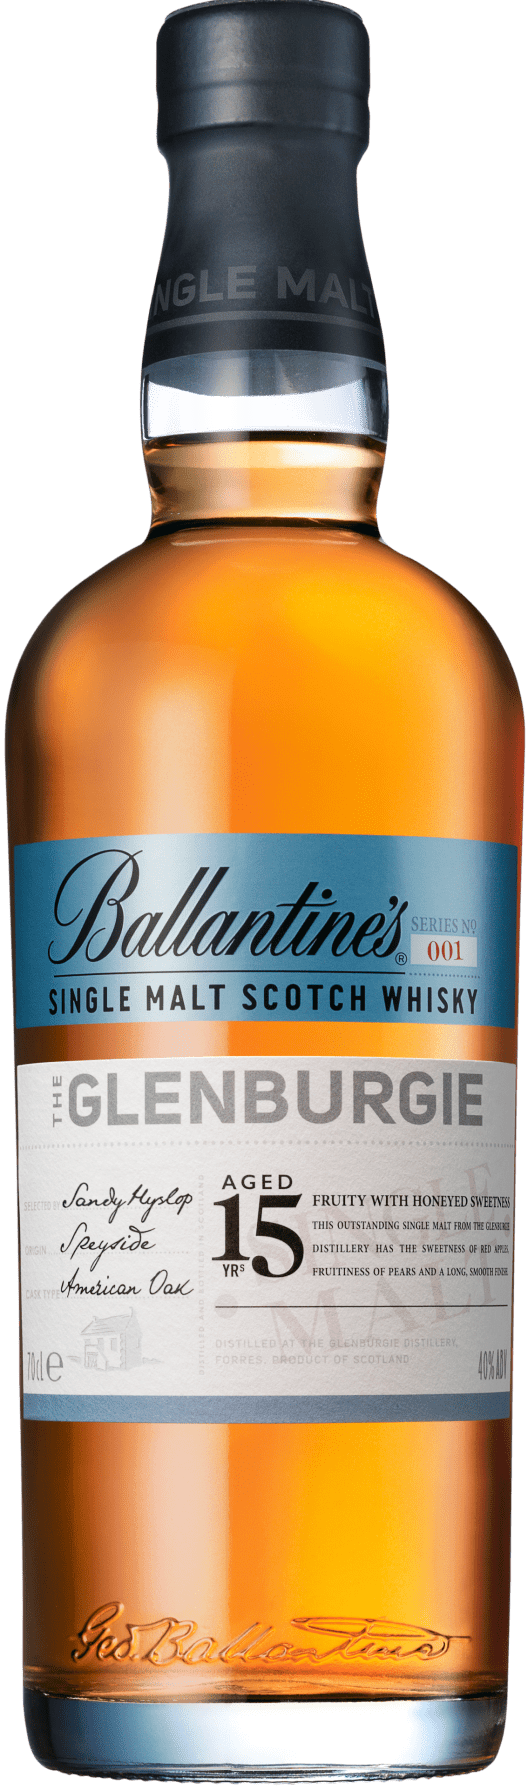 BSP Ballantine's 15 Glenburgie 